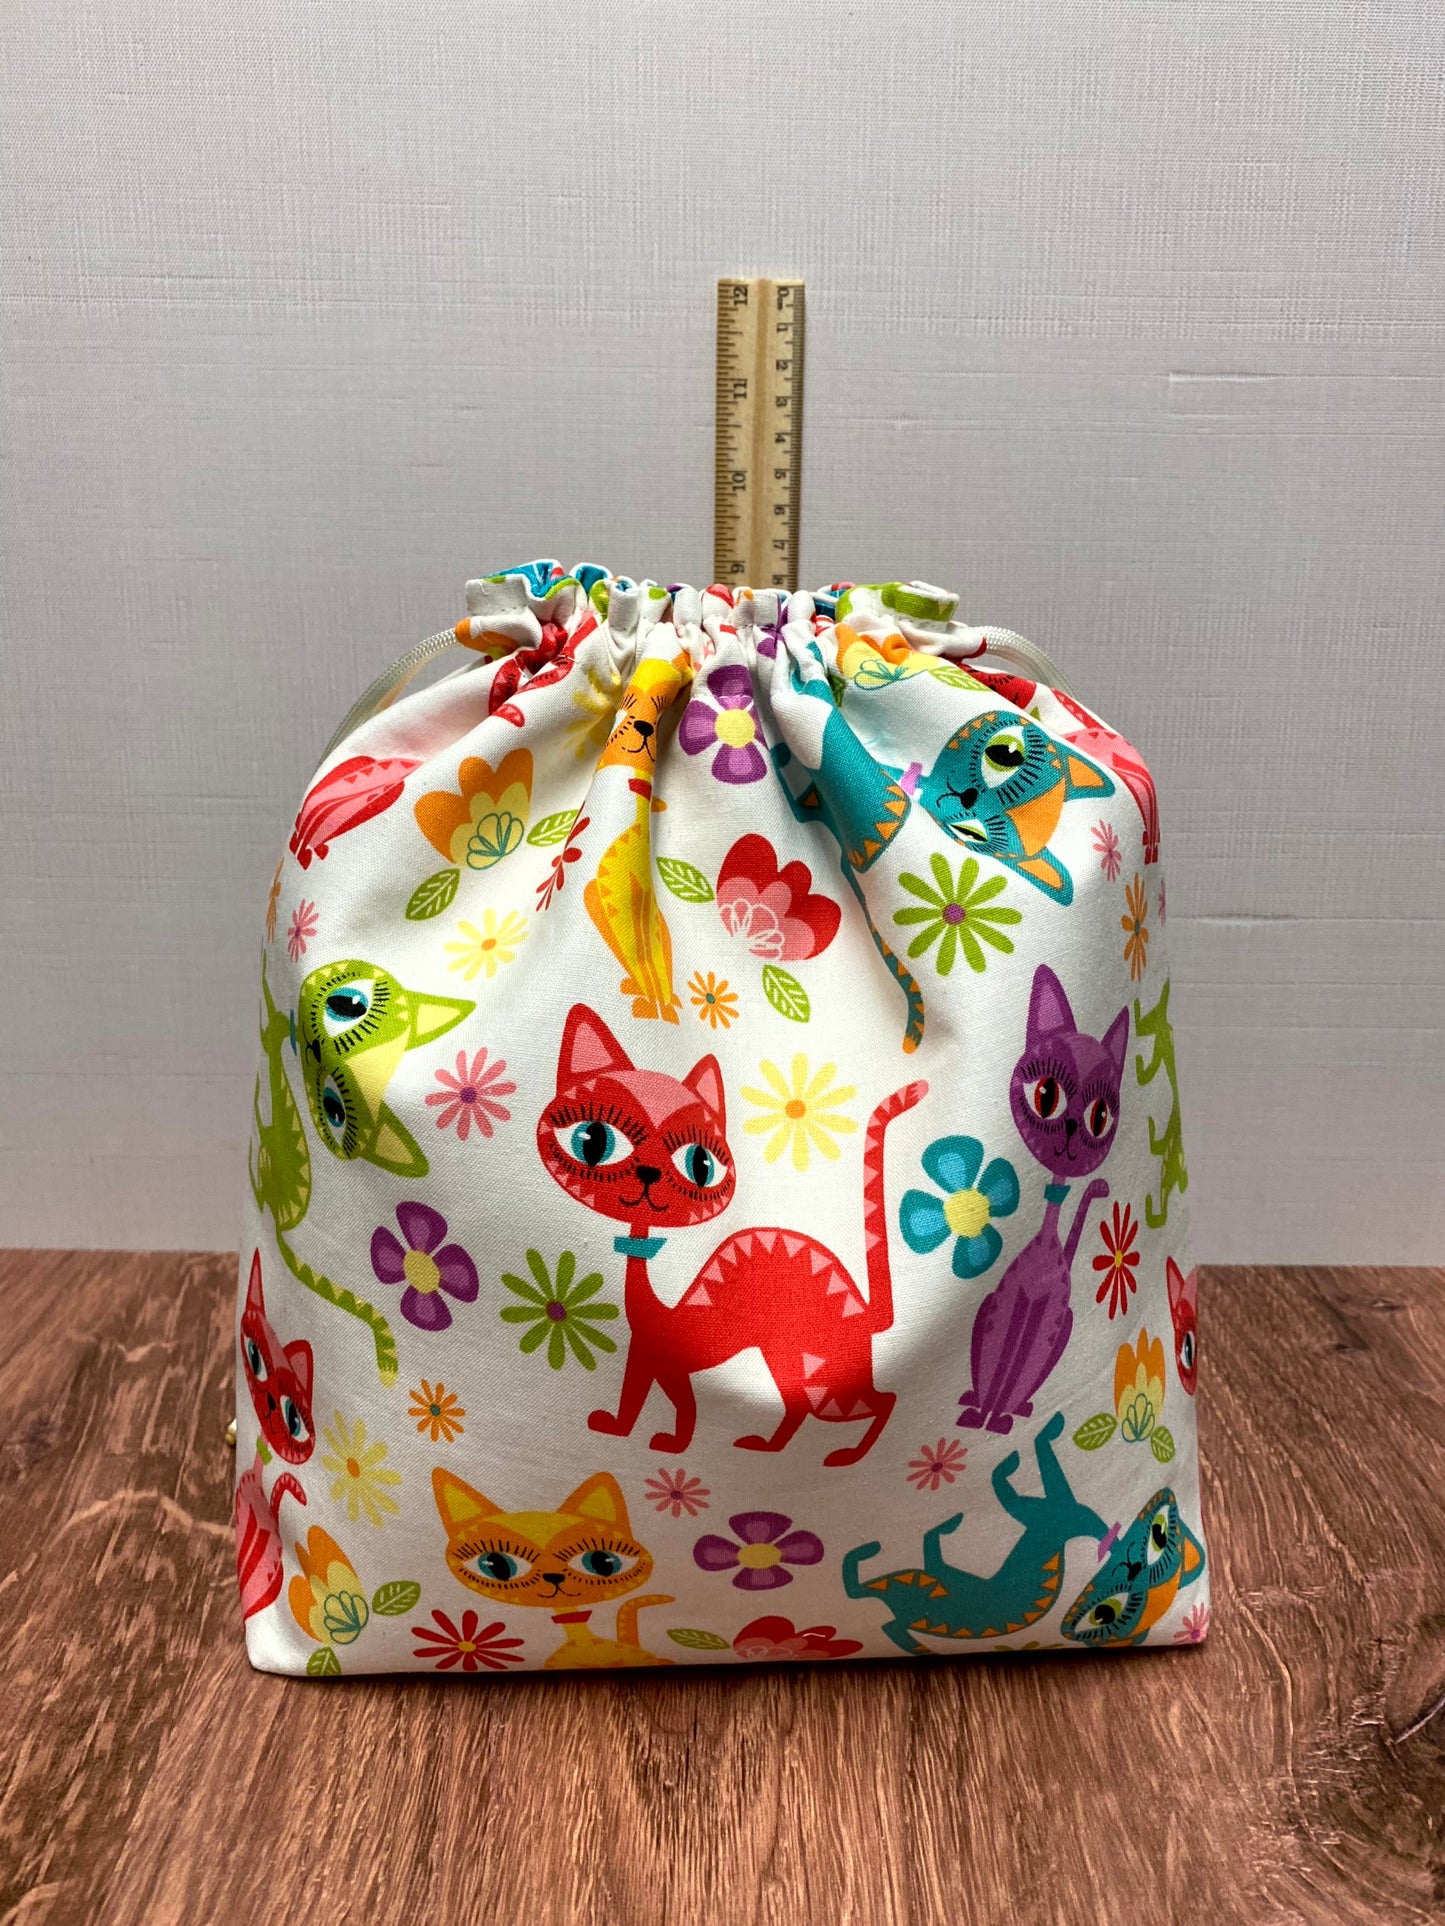 Cat Project Bag - Handmade - Drawstring Bag – Knitting Bag – Crochet Bag - Cross Stitch Bag - Toy Sack - Bingo Bag - Kitty - Kitten